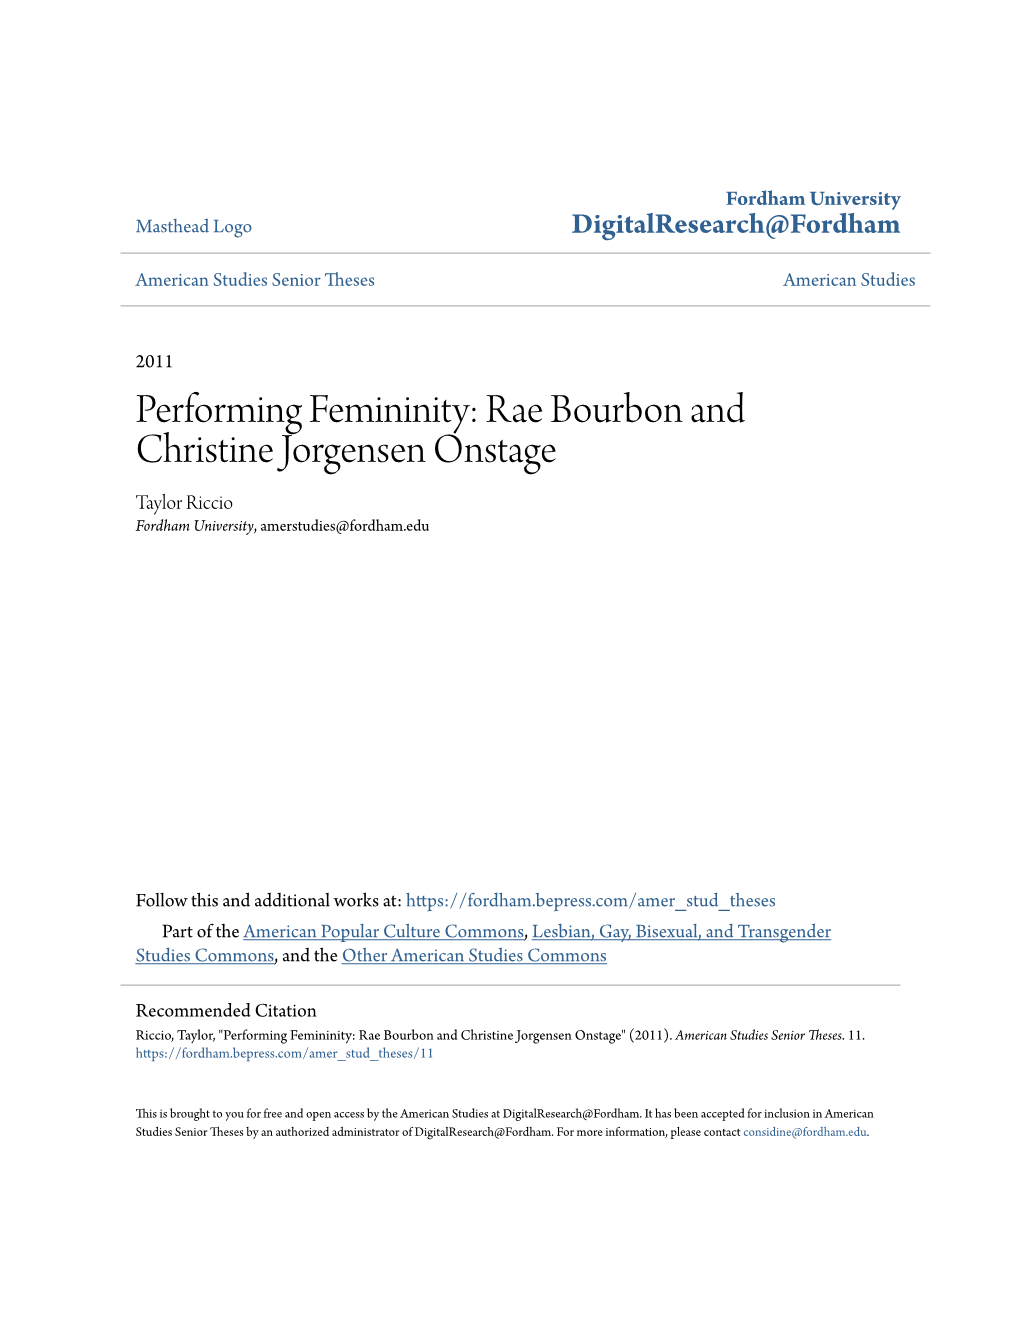 Performing Femininity: Rae Bourbon and Christine Jorgensen Onstage Taylor Riccio Fordham University, Amerstudies@Fordham.Edu